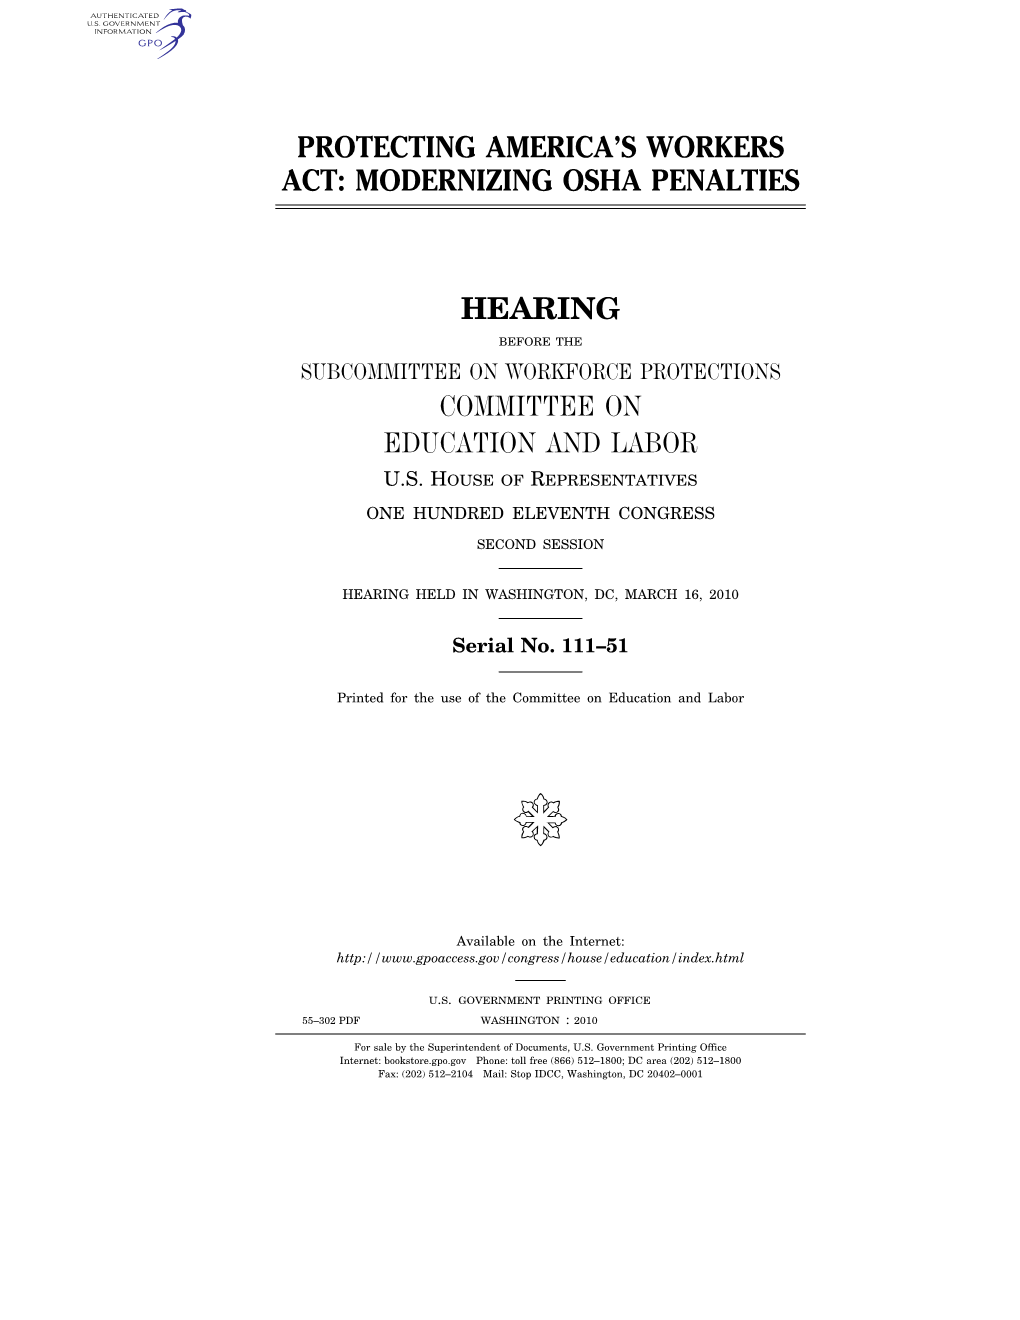 Protecting America's Workers Act: Modernizing Osha Penalties Hearing